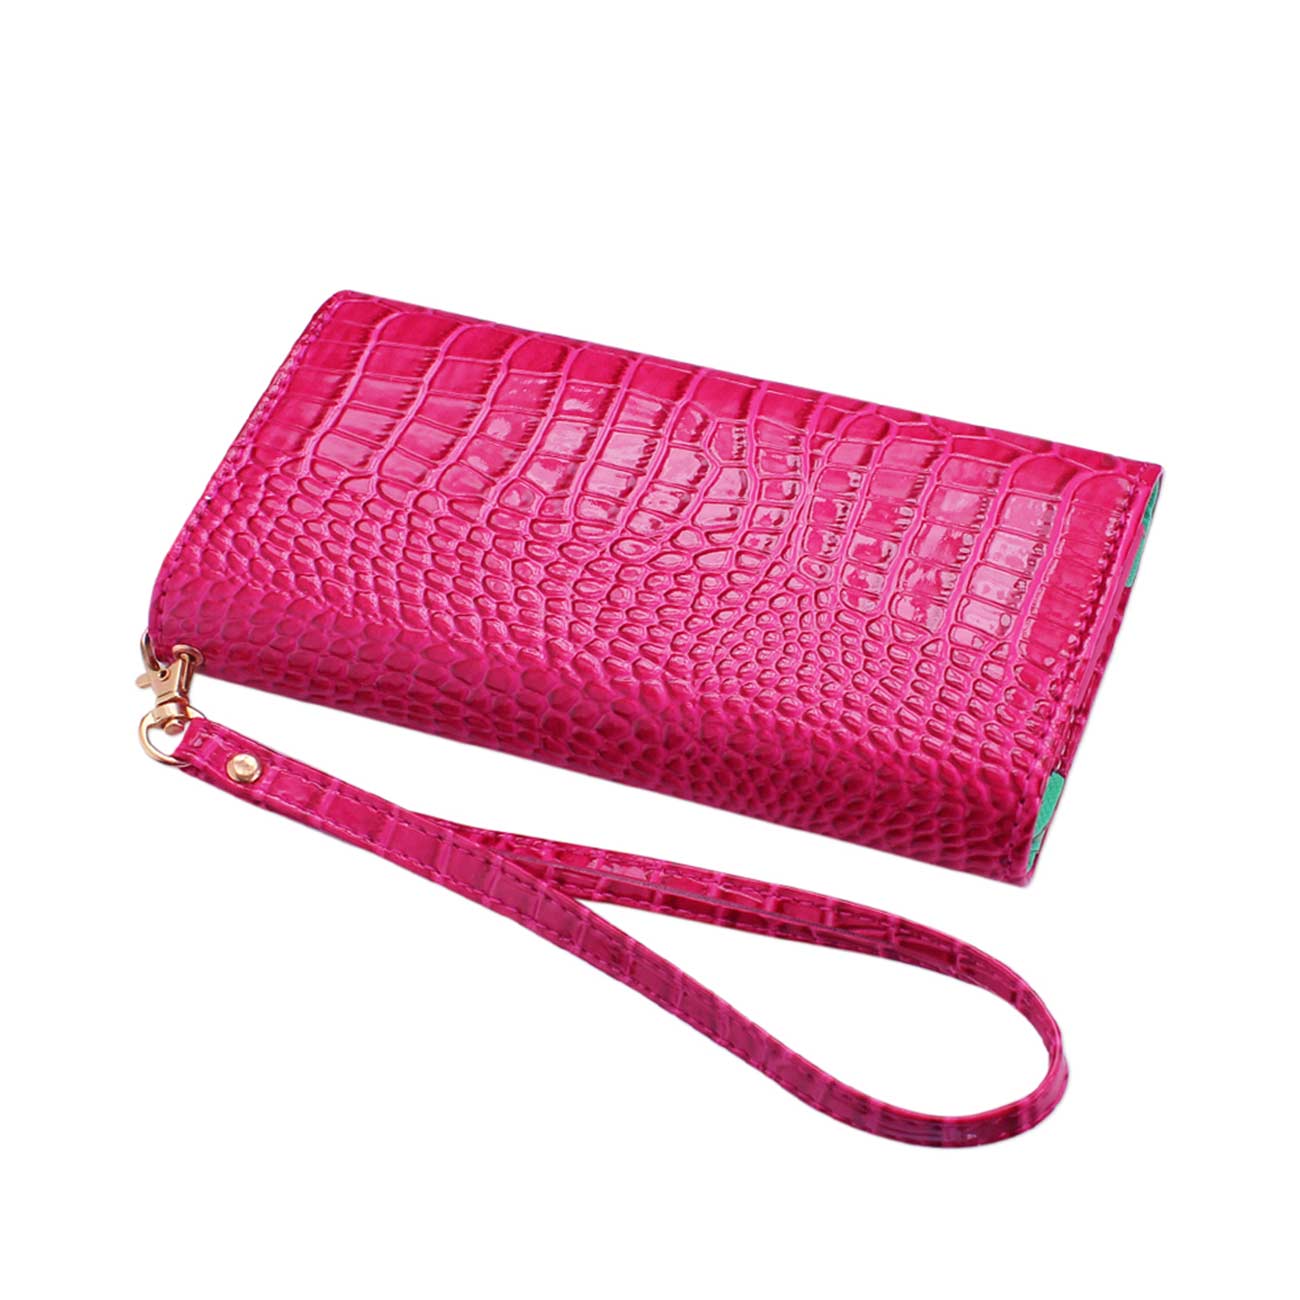 Purse Wallet Case Crocodile Pattern Hot Pink Color